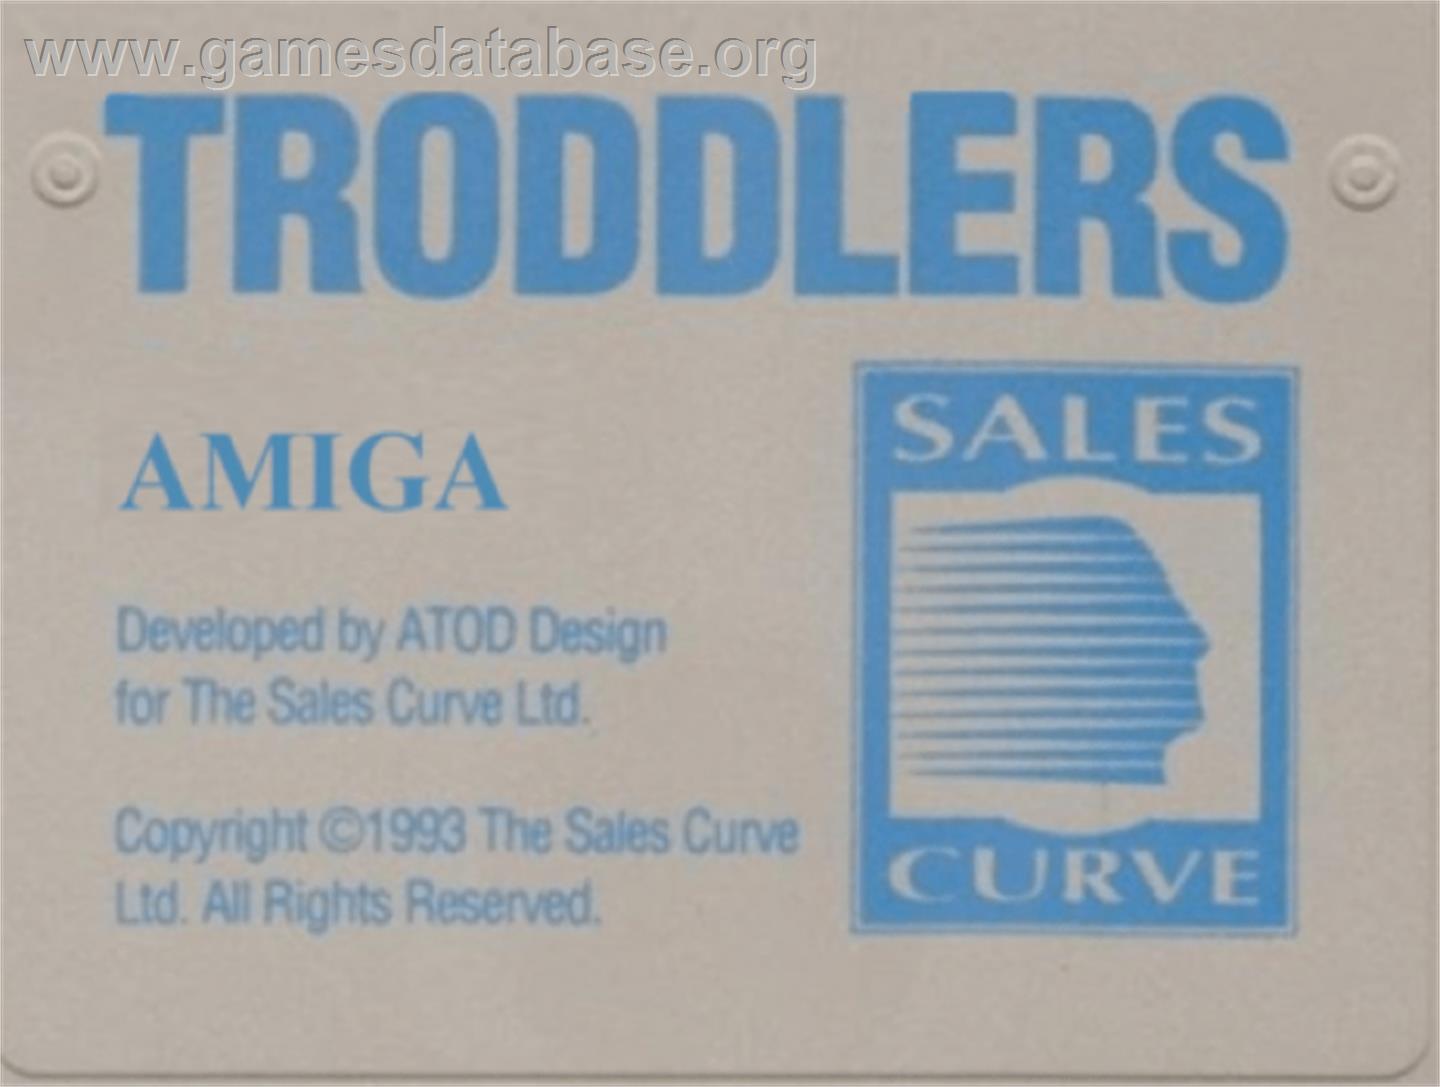 Troddlers - Commodore Amiga - Artwork - Cartridge Top